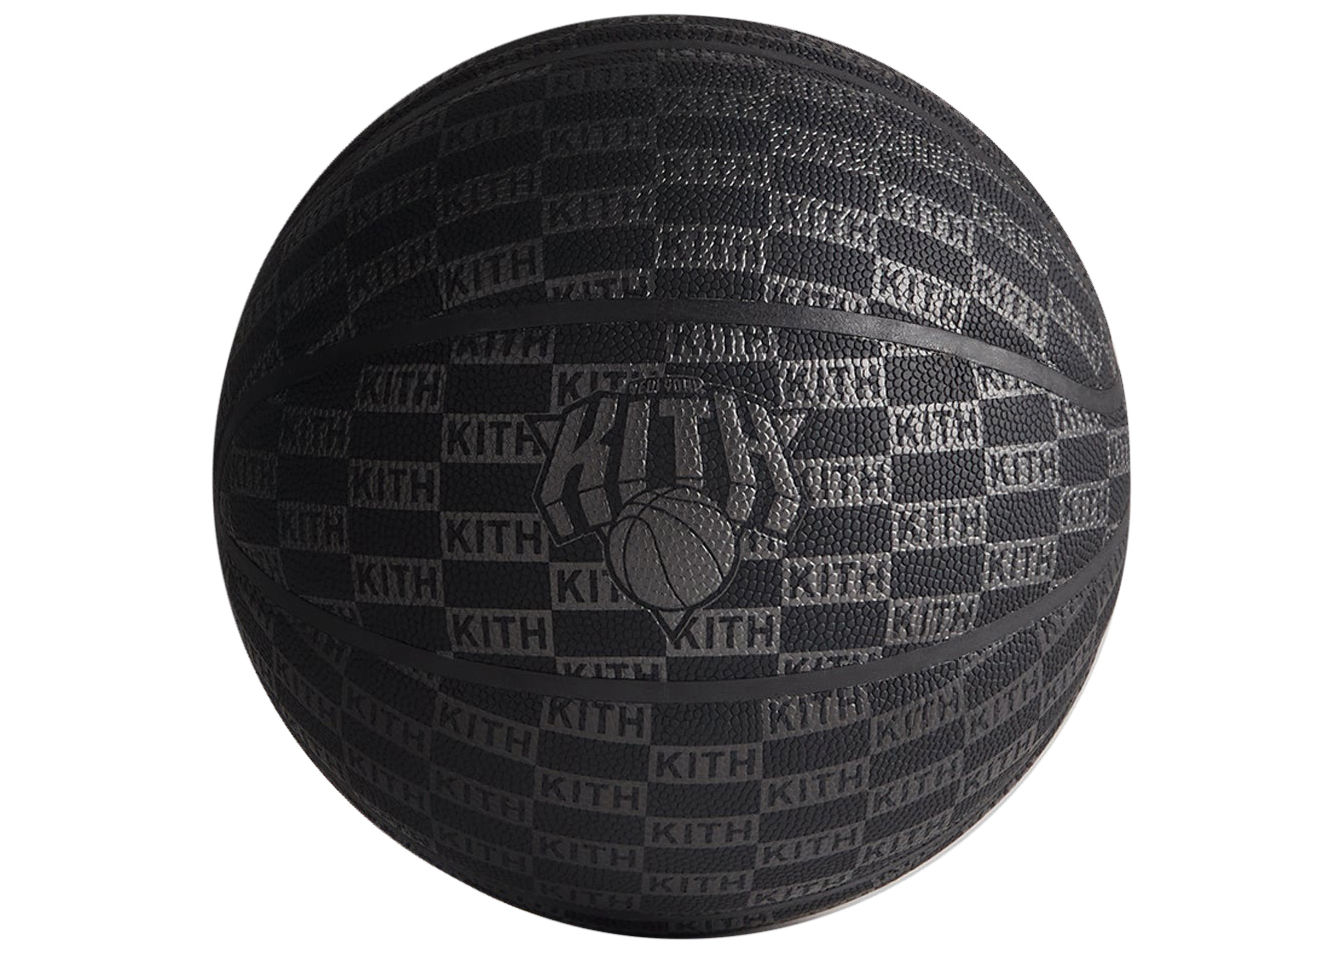 Kith x Wilson for New York Knicks Basketball Black - US